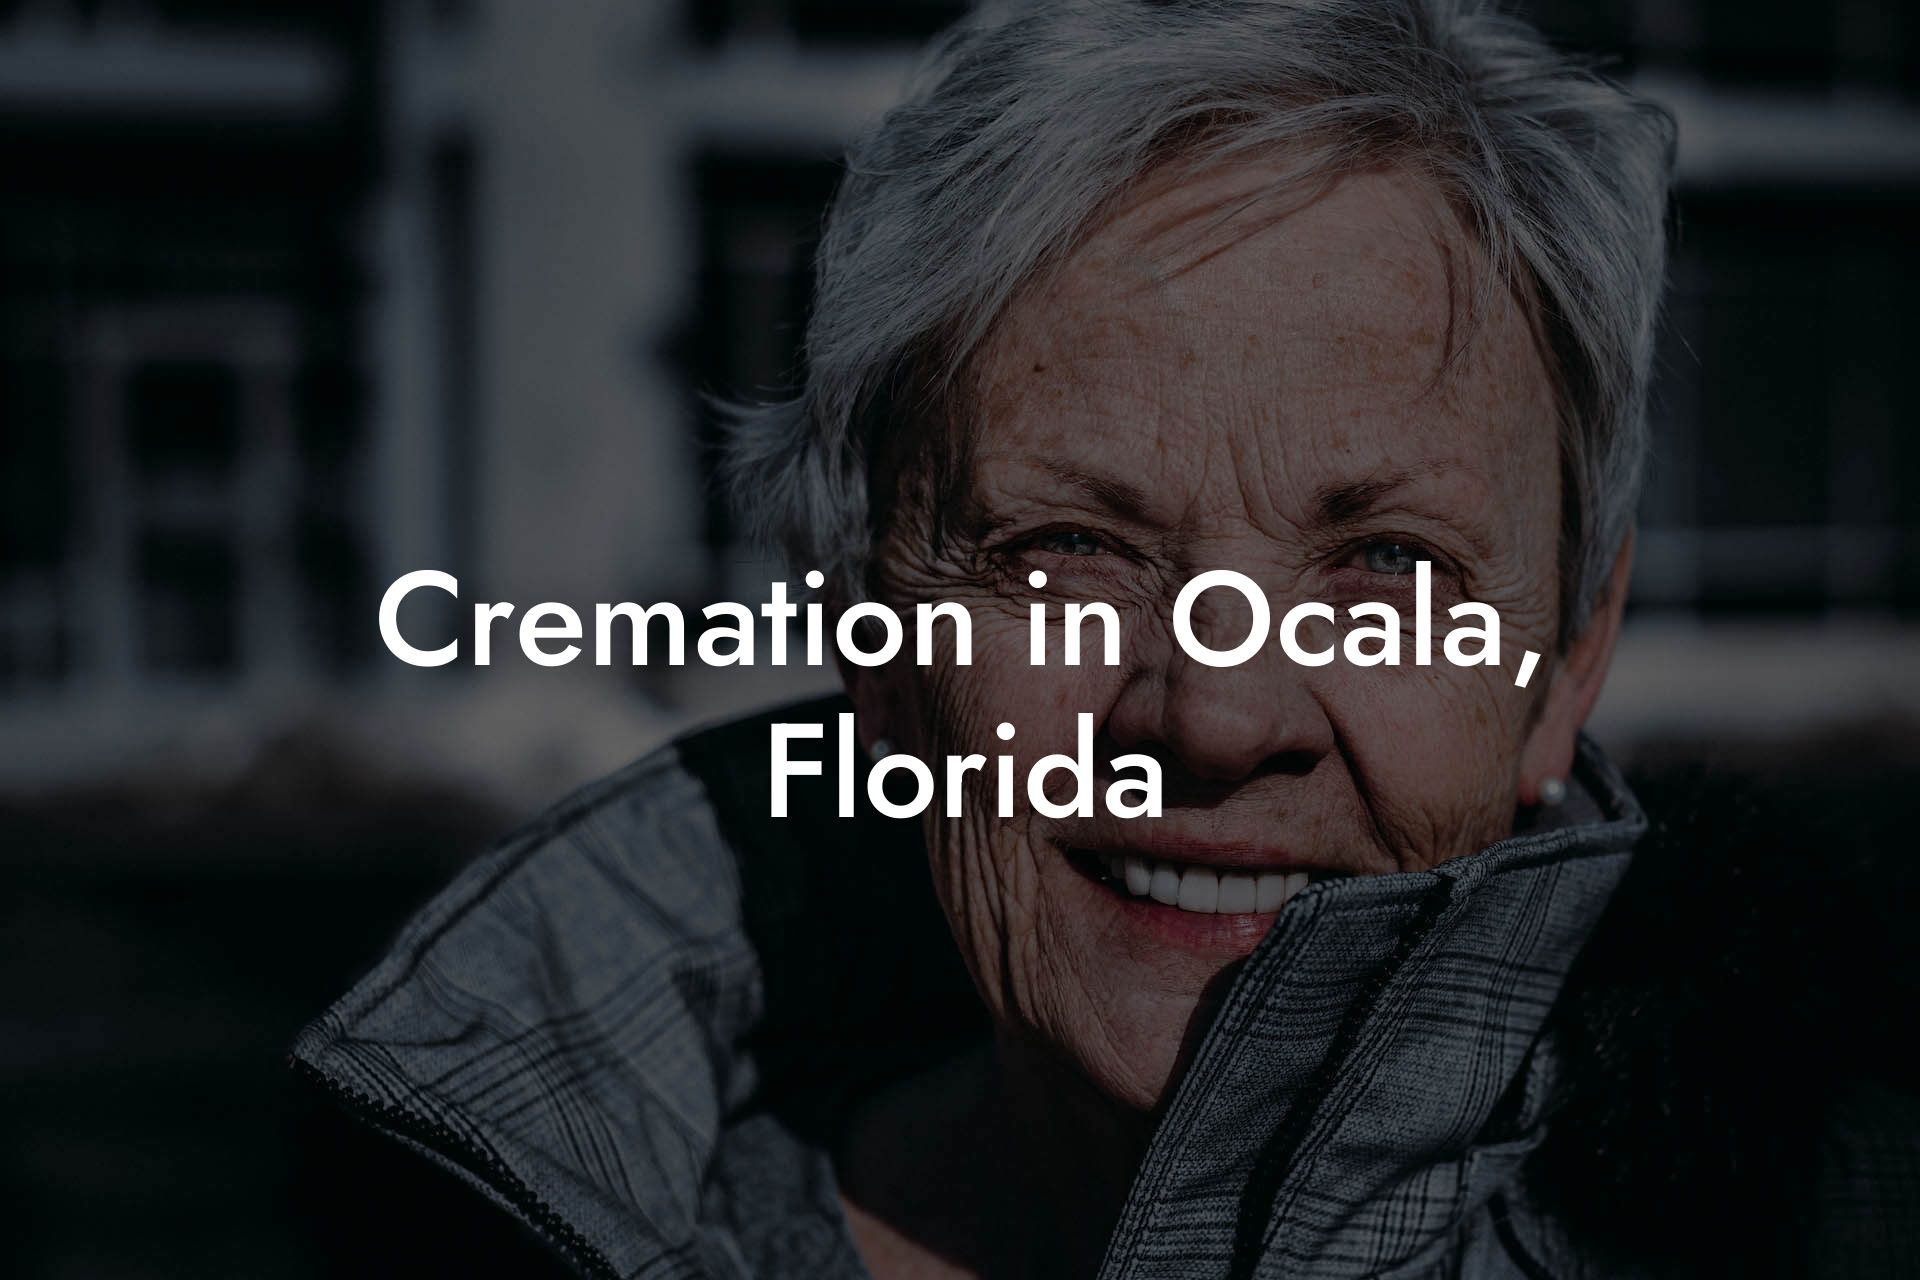 Cremation in Ocala, Florida